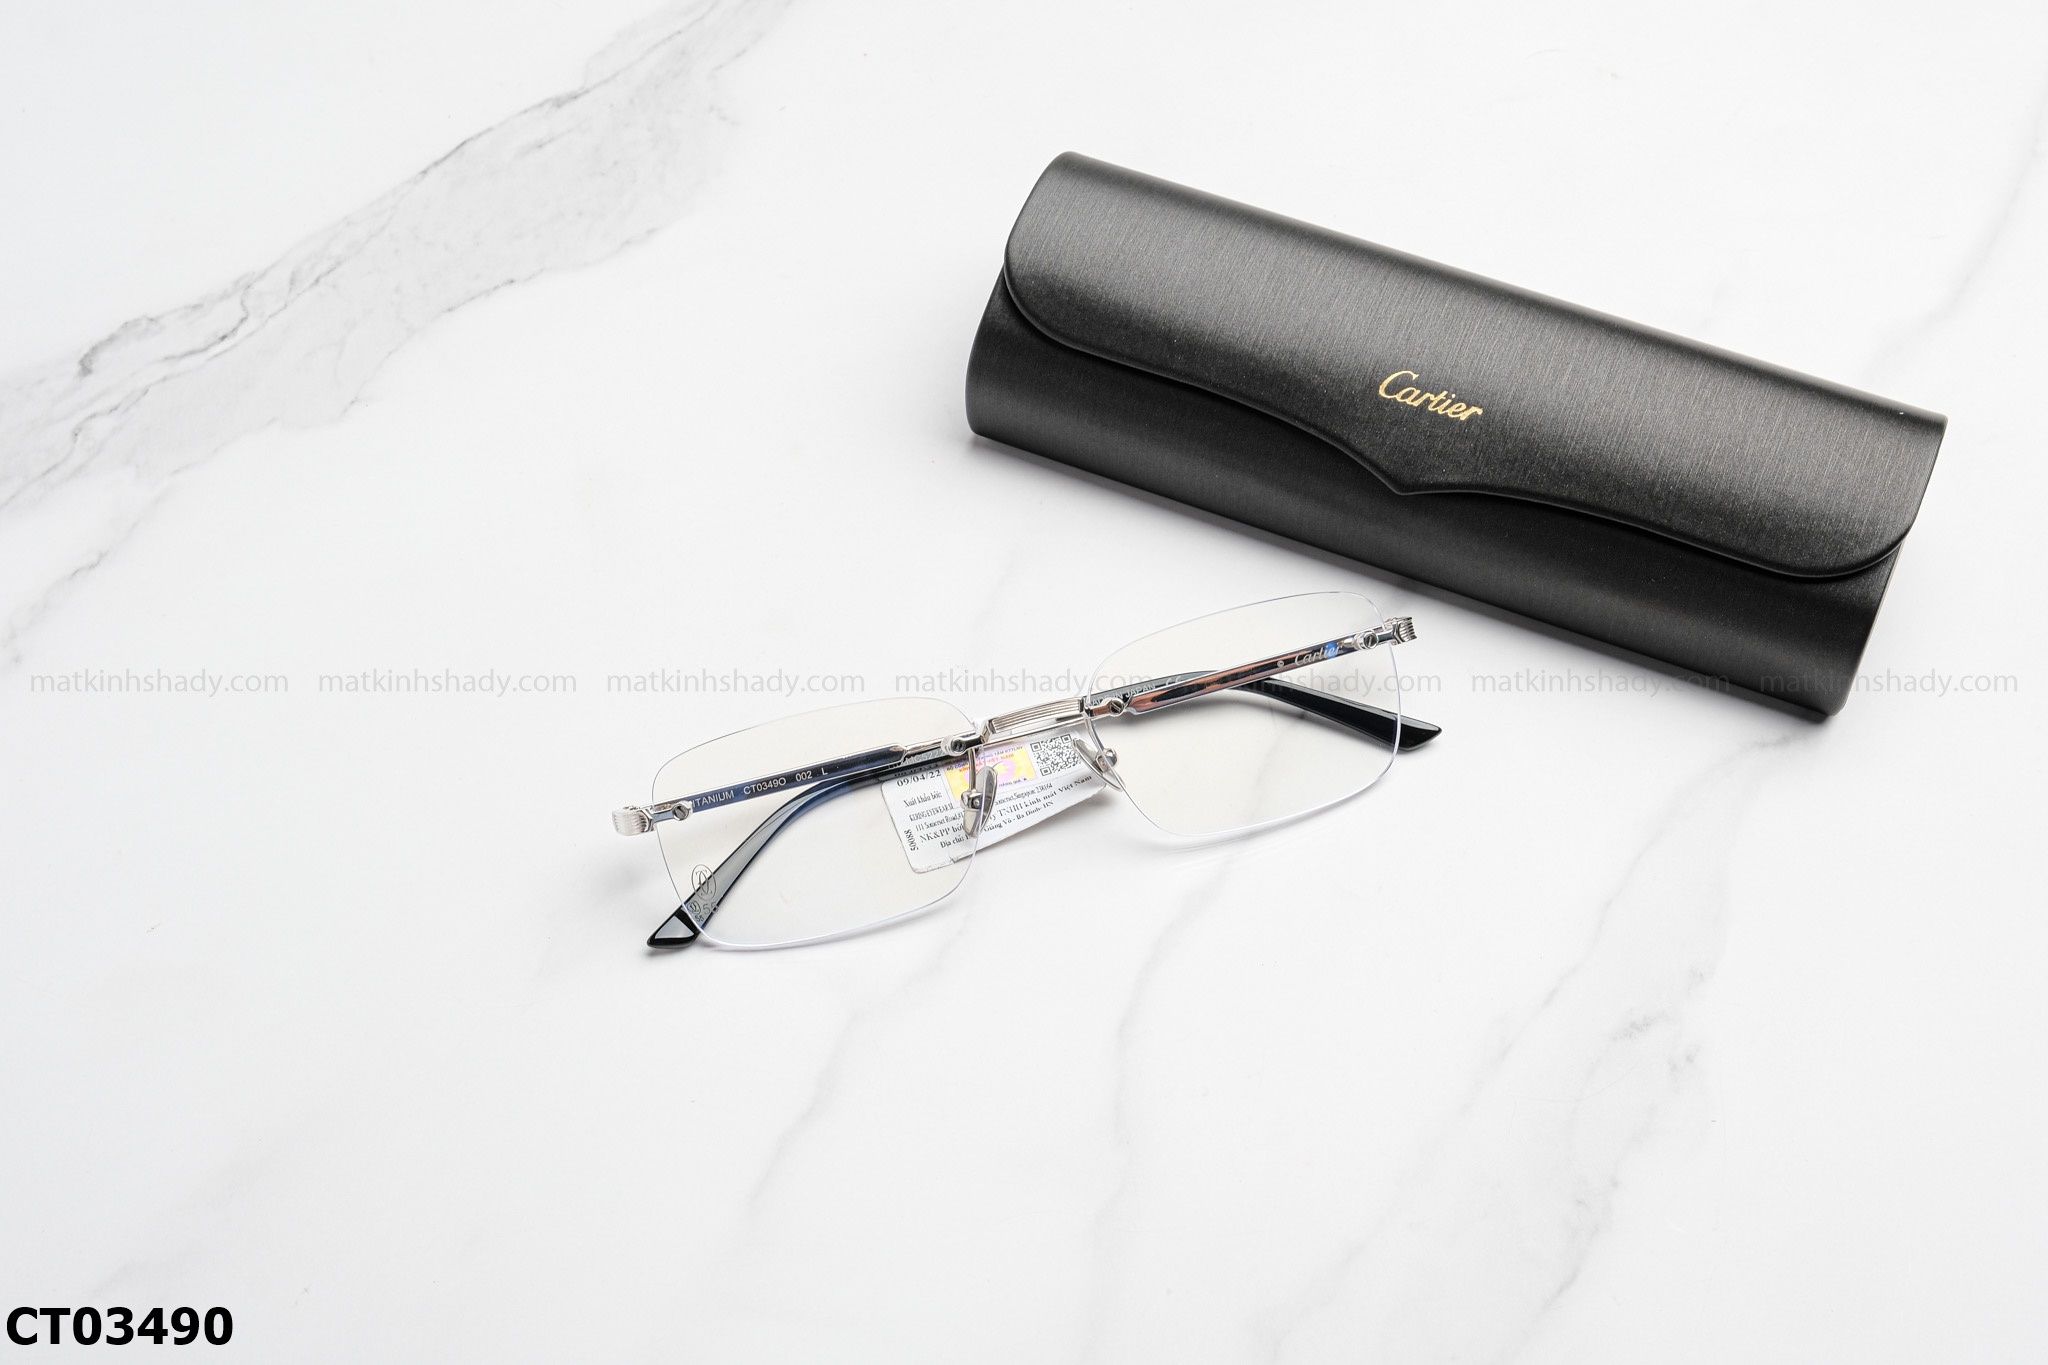  Cartier Eyewear - Glasses - CT03490 